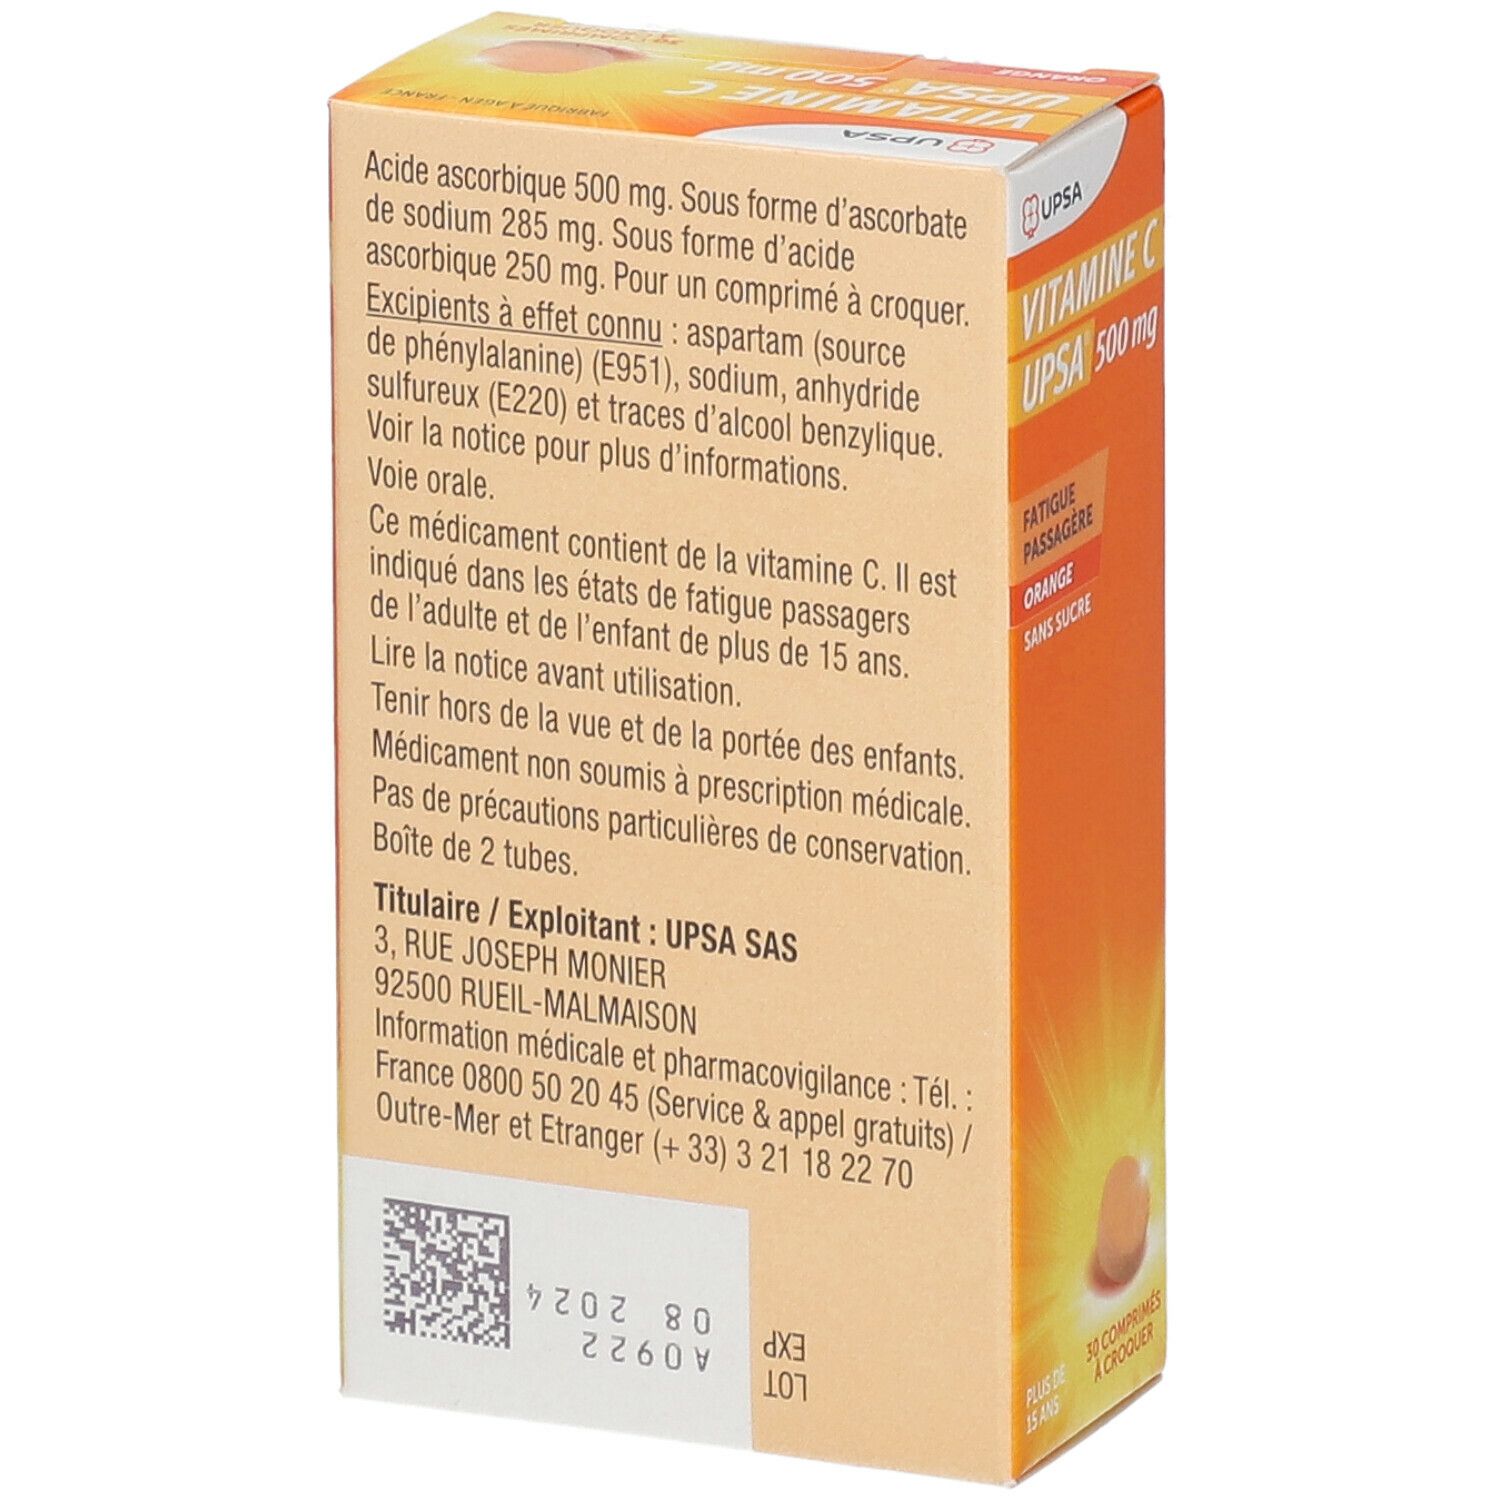 Vitamine C Upsa® 500 mg